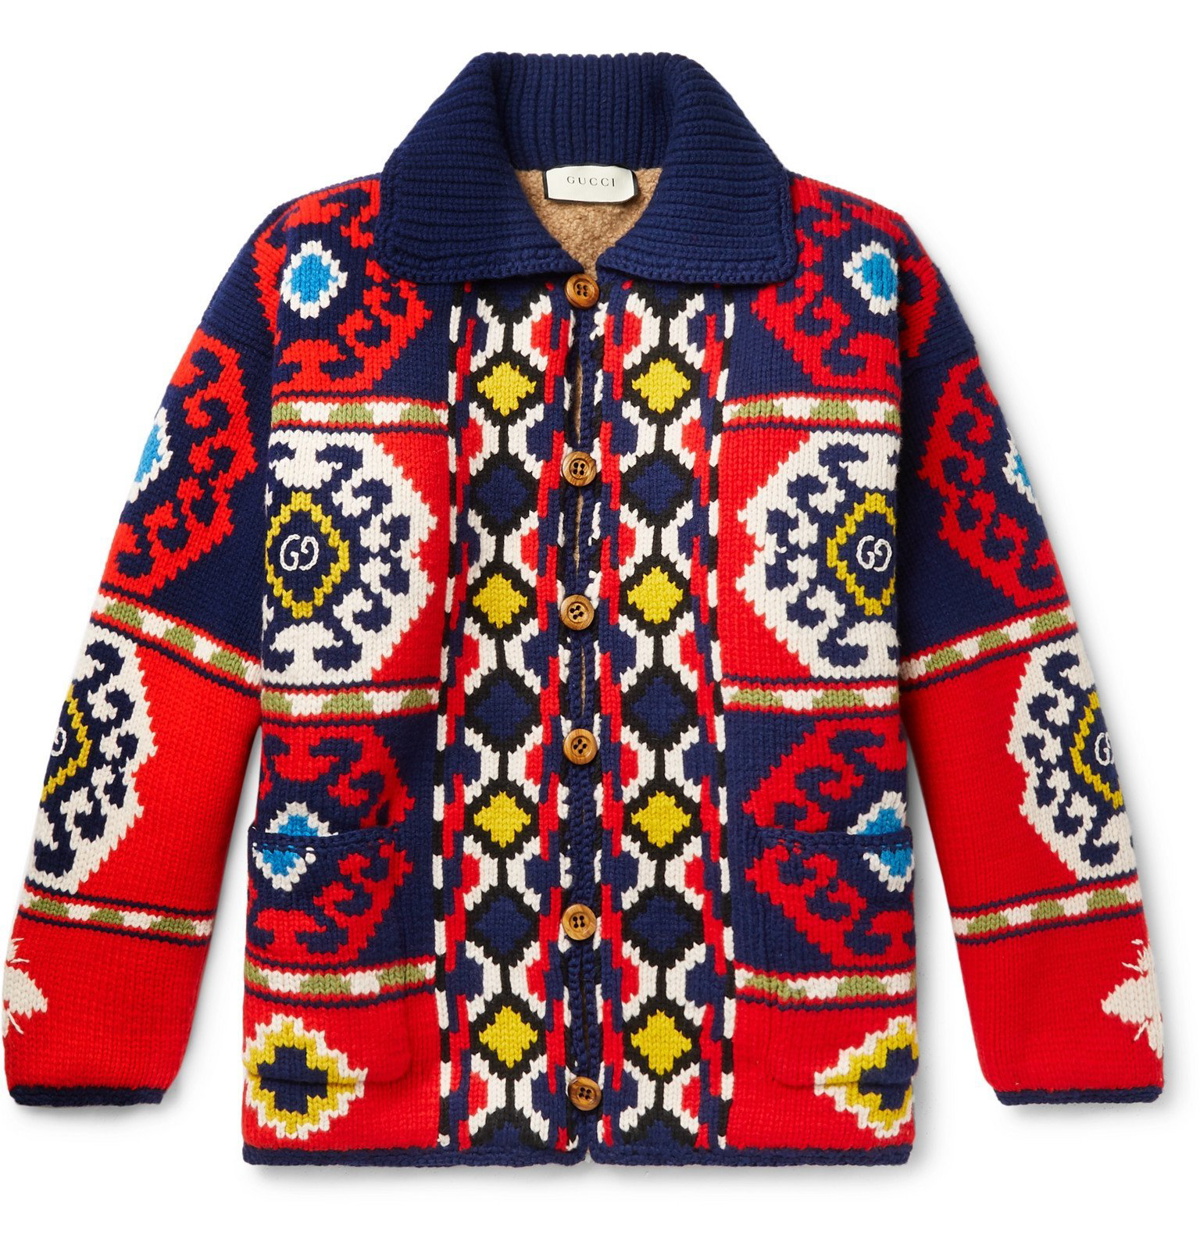 Gucci - Intarsia Wool and Alpaca-Blend Cardigan - Multi Gucci